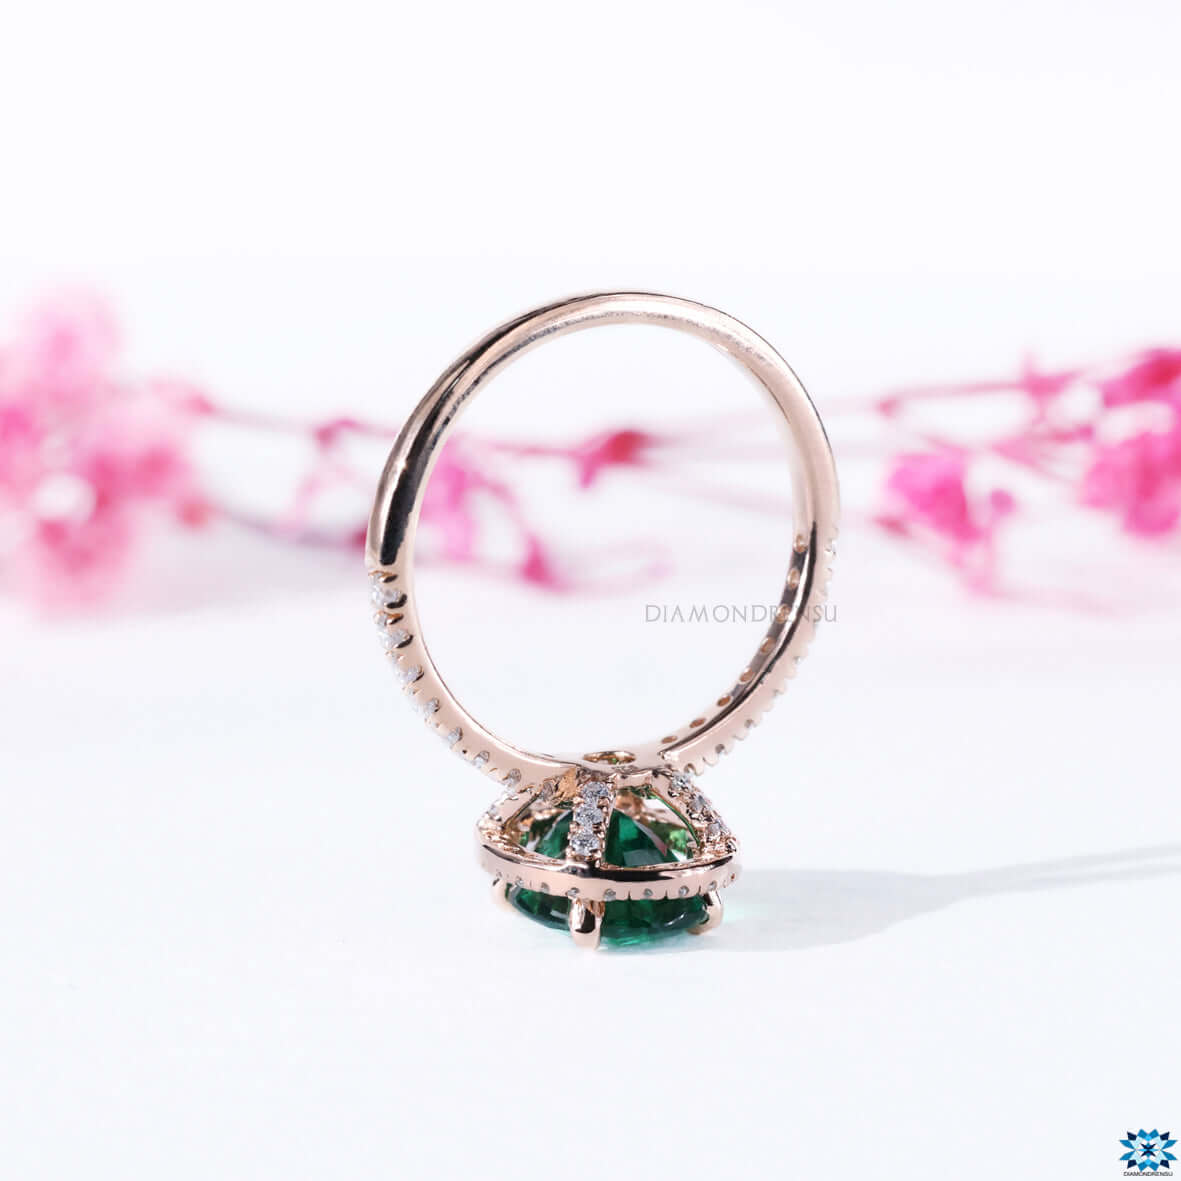 vintage style engagement ring - diamondrensu